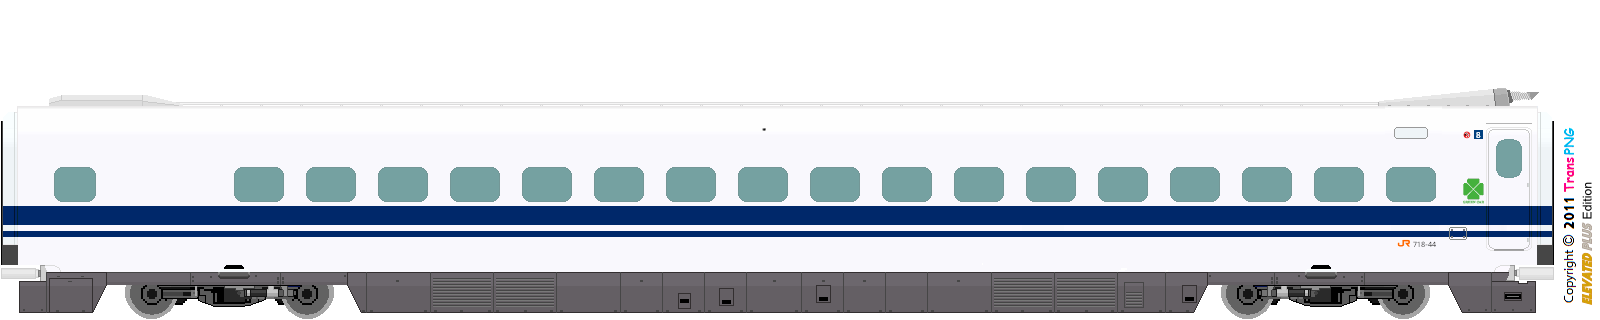 9011 - [9011] Central Japan Railway 52287585888_16738c4dde_o